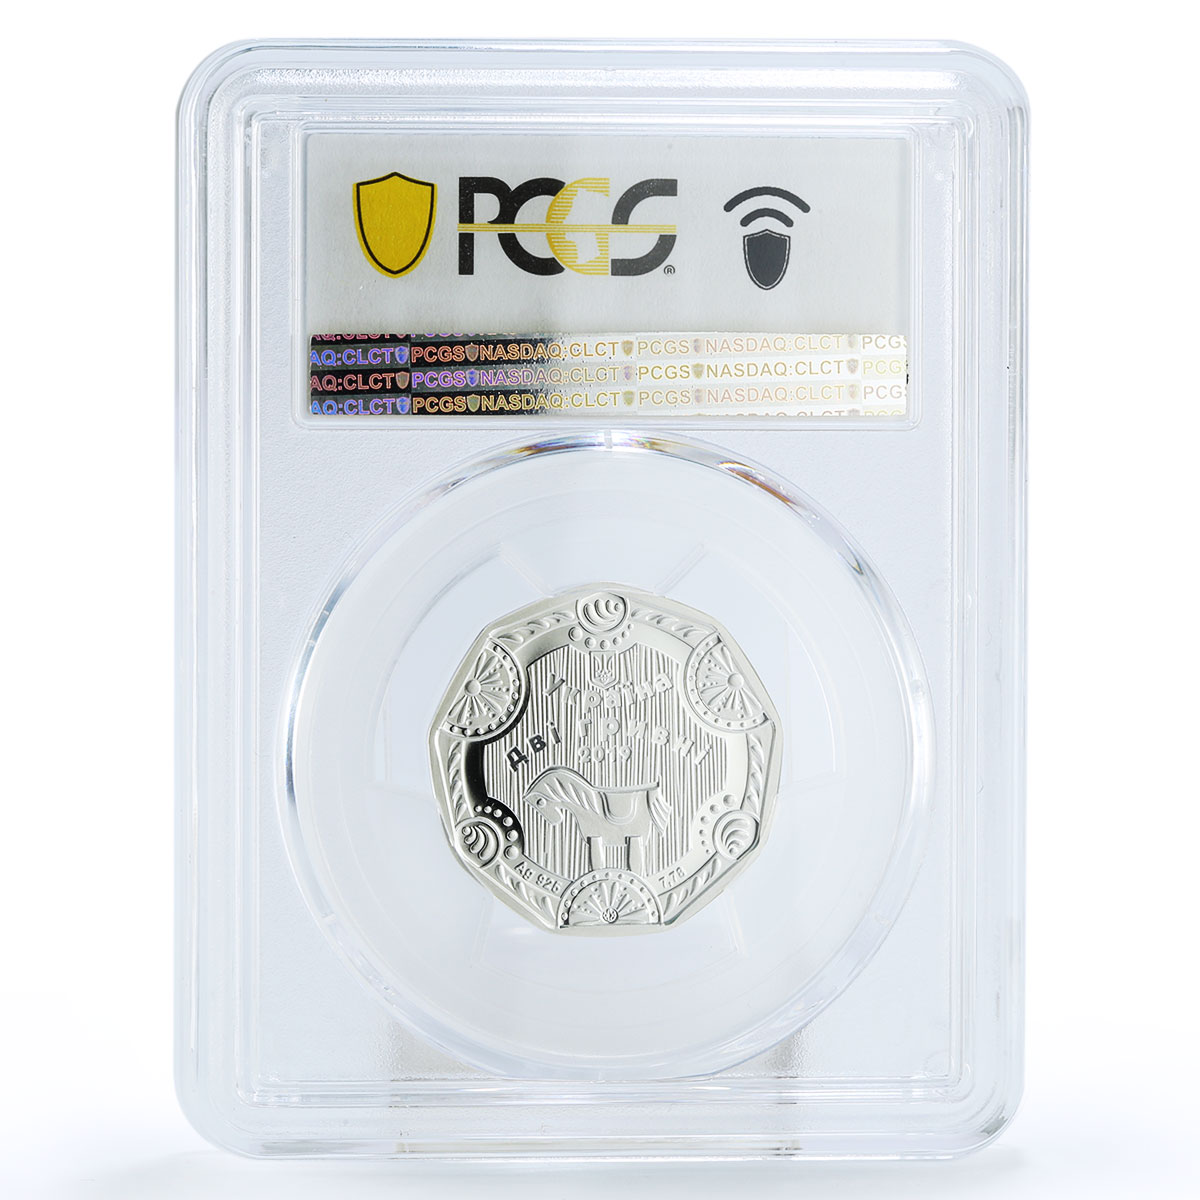 Ukraine 2 hryvnas Yavoriv Zabavka Horse SP70 PCGS silver coin 2019